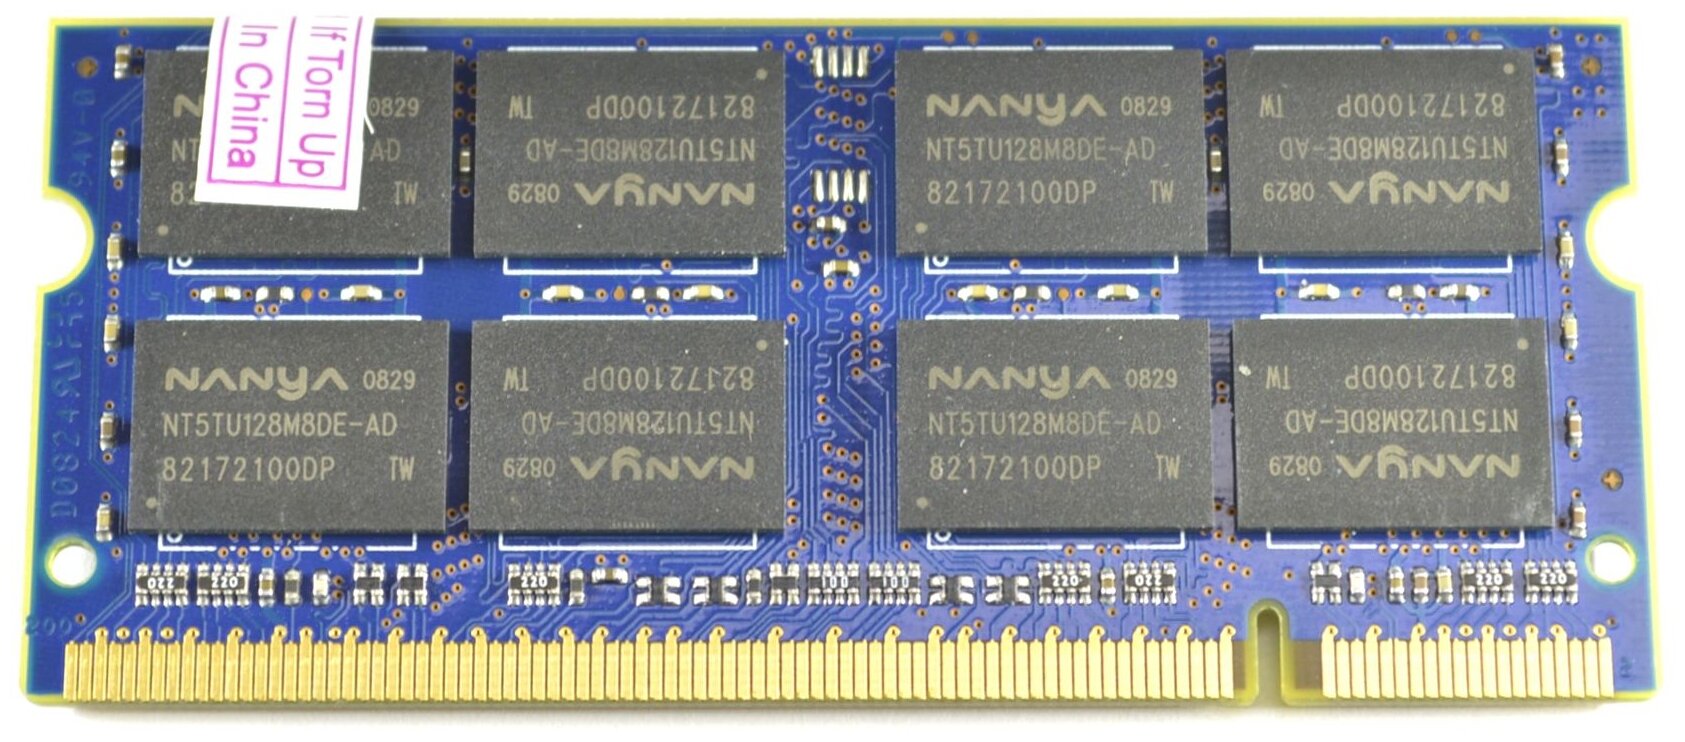 Оперативная память Nanya 2 ГБ DDR2 800 МГц SODIMM CL6 NT2GT64U8HD0BN-AD